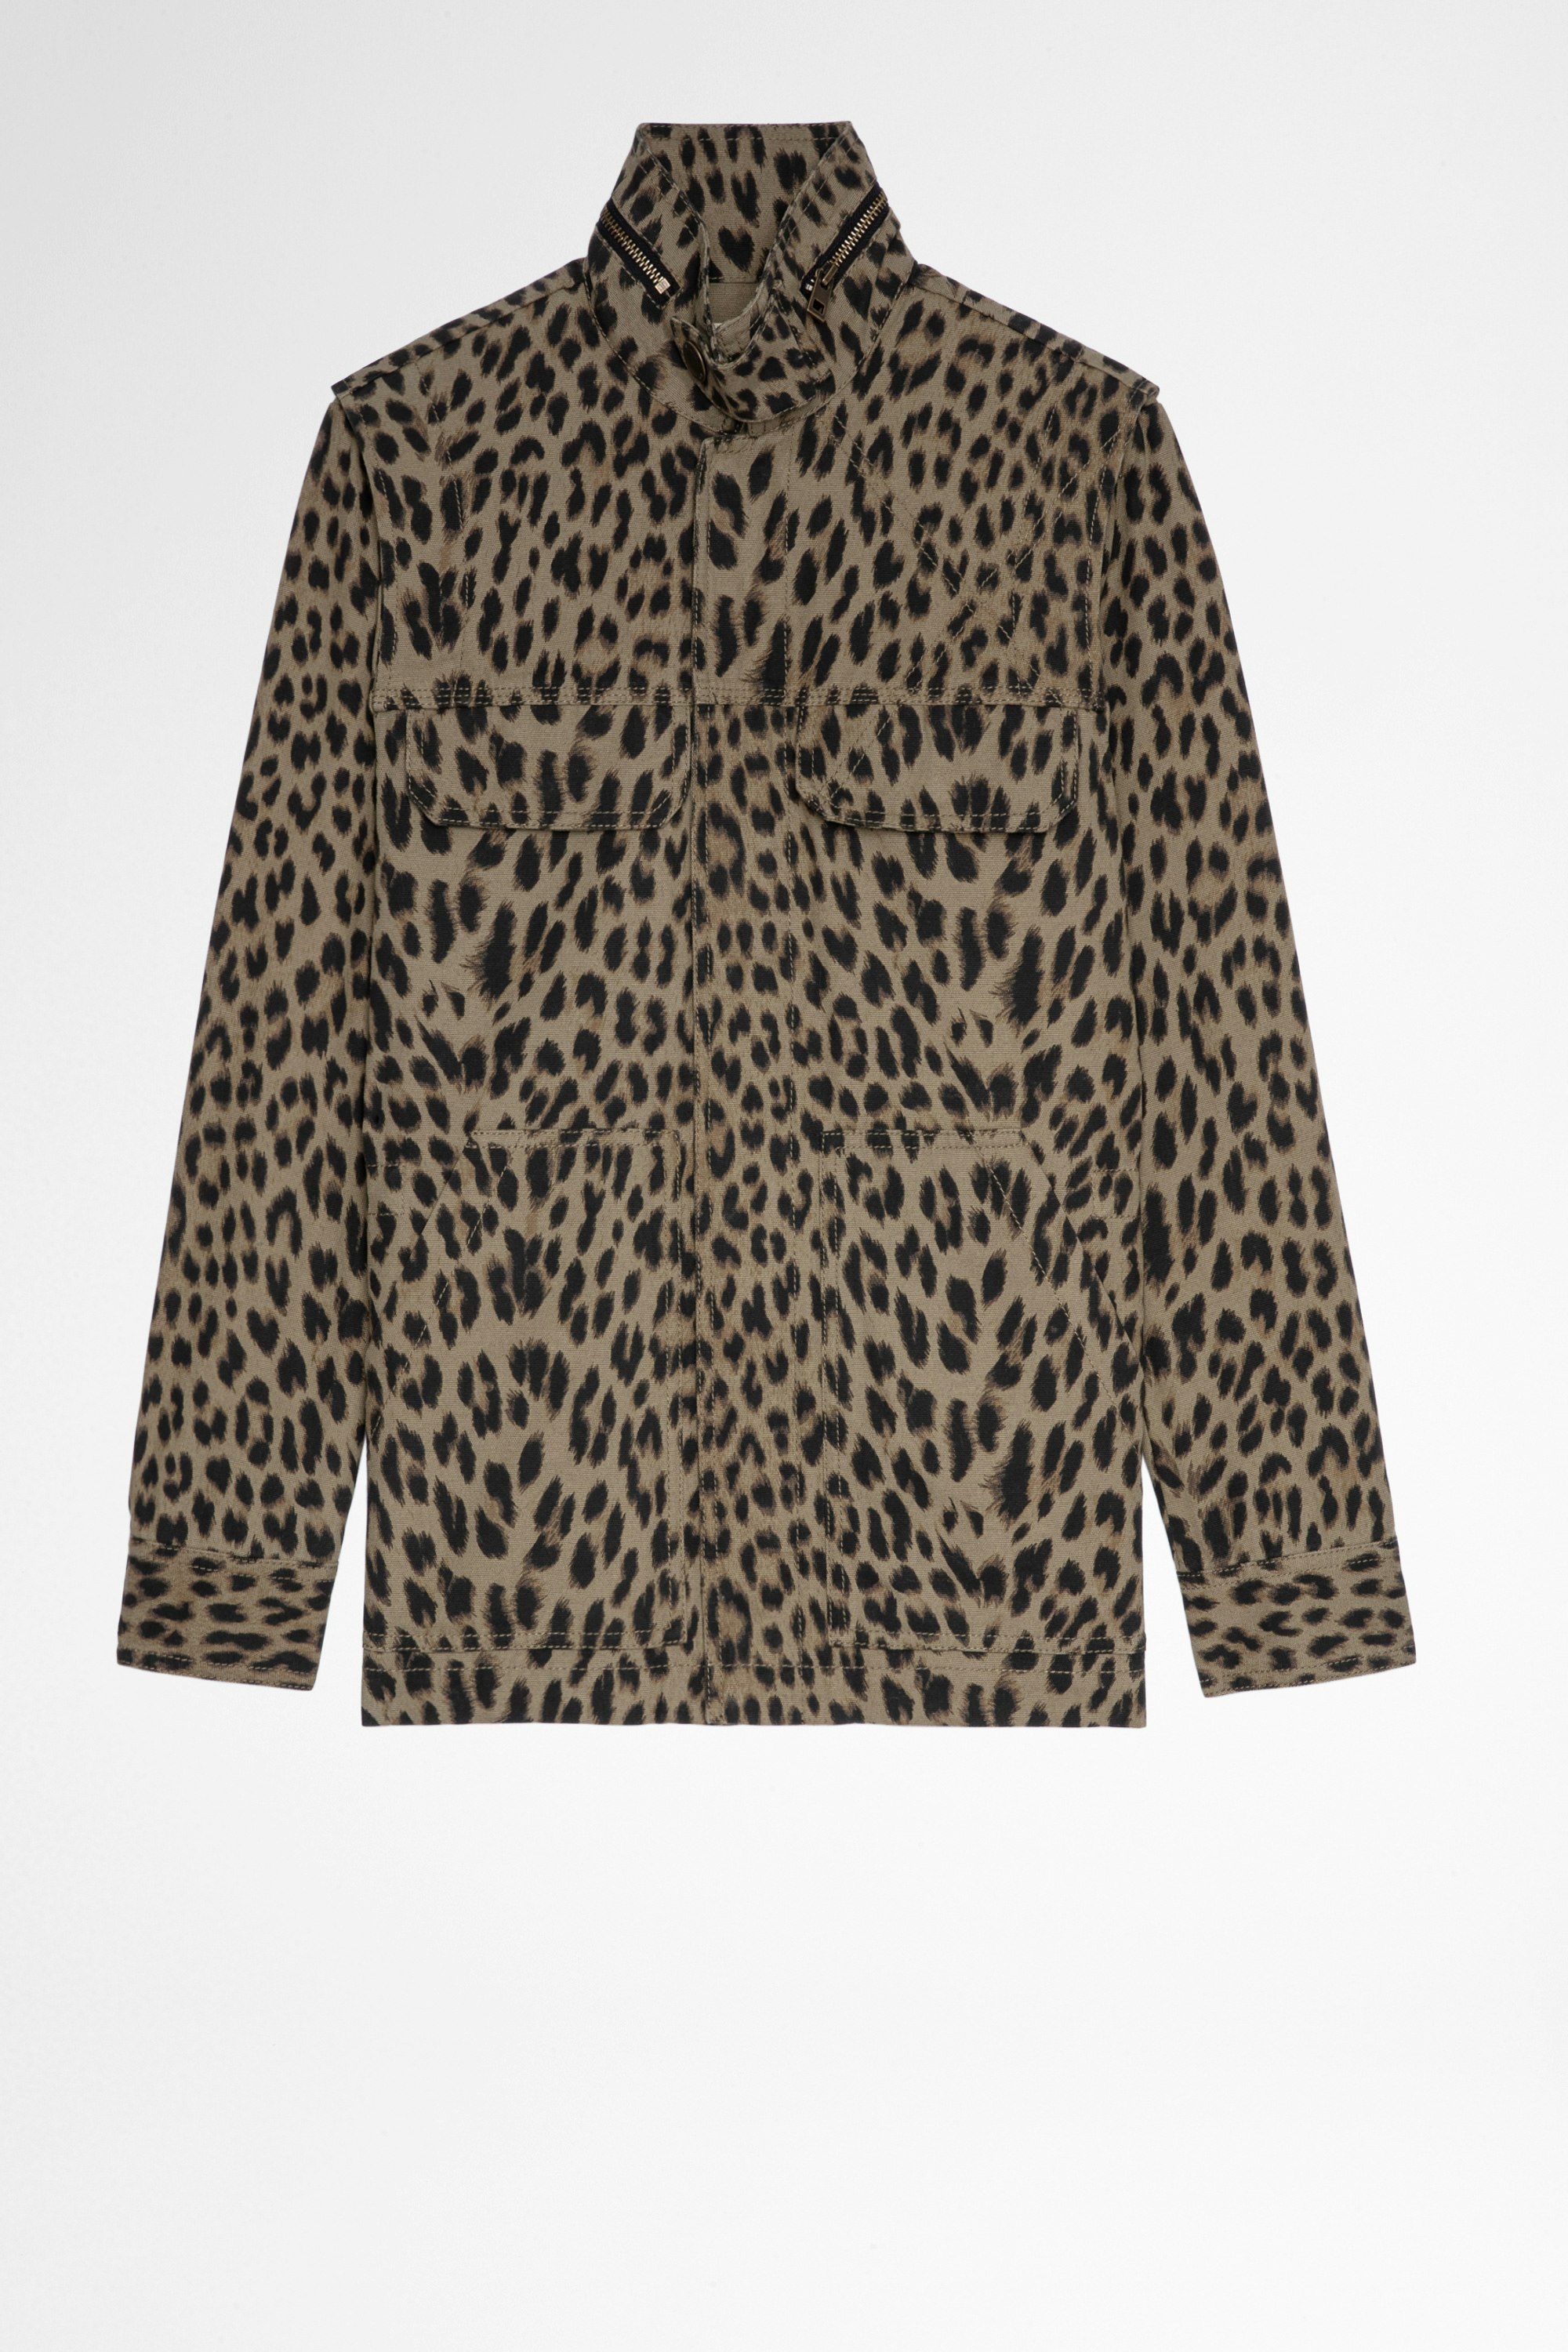 Kayaka Leopard Jacket Women's khaki cotton jacket in leopard print. Made with fibers from organic farming.